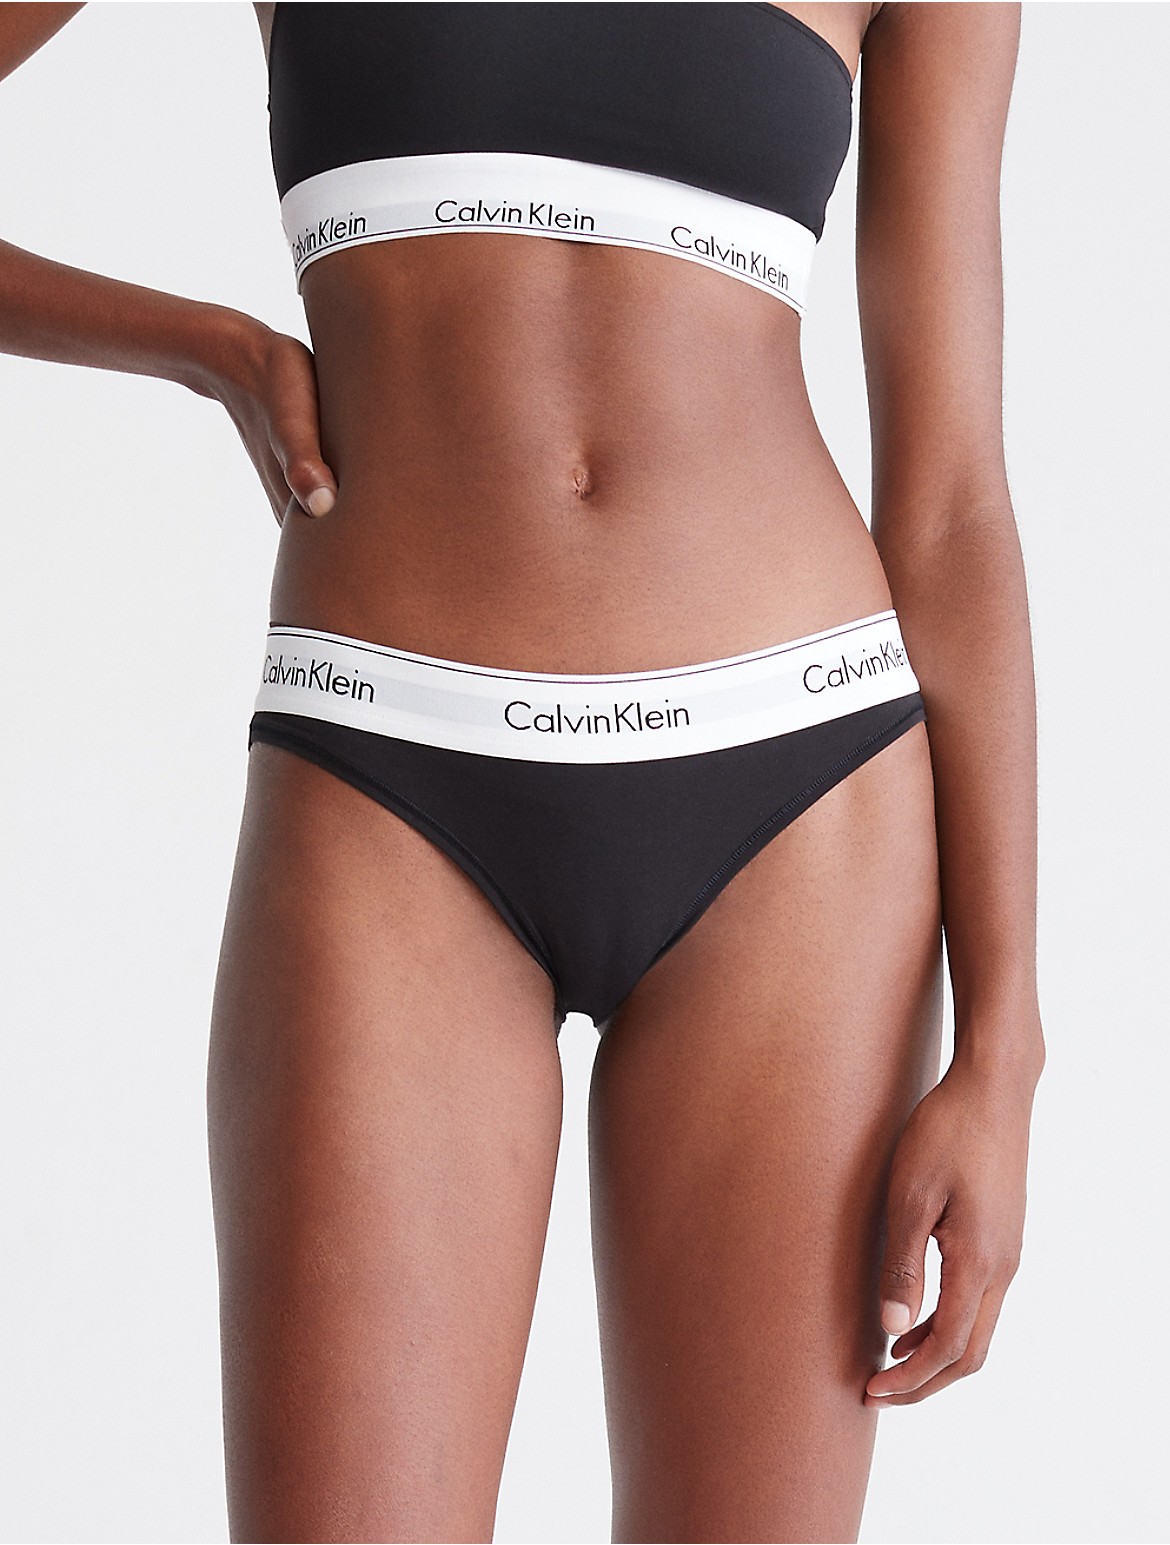 Calvin Klein Women's Modern Cotton Bikini Bottom - Black - S